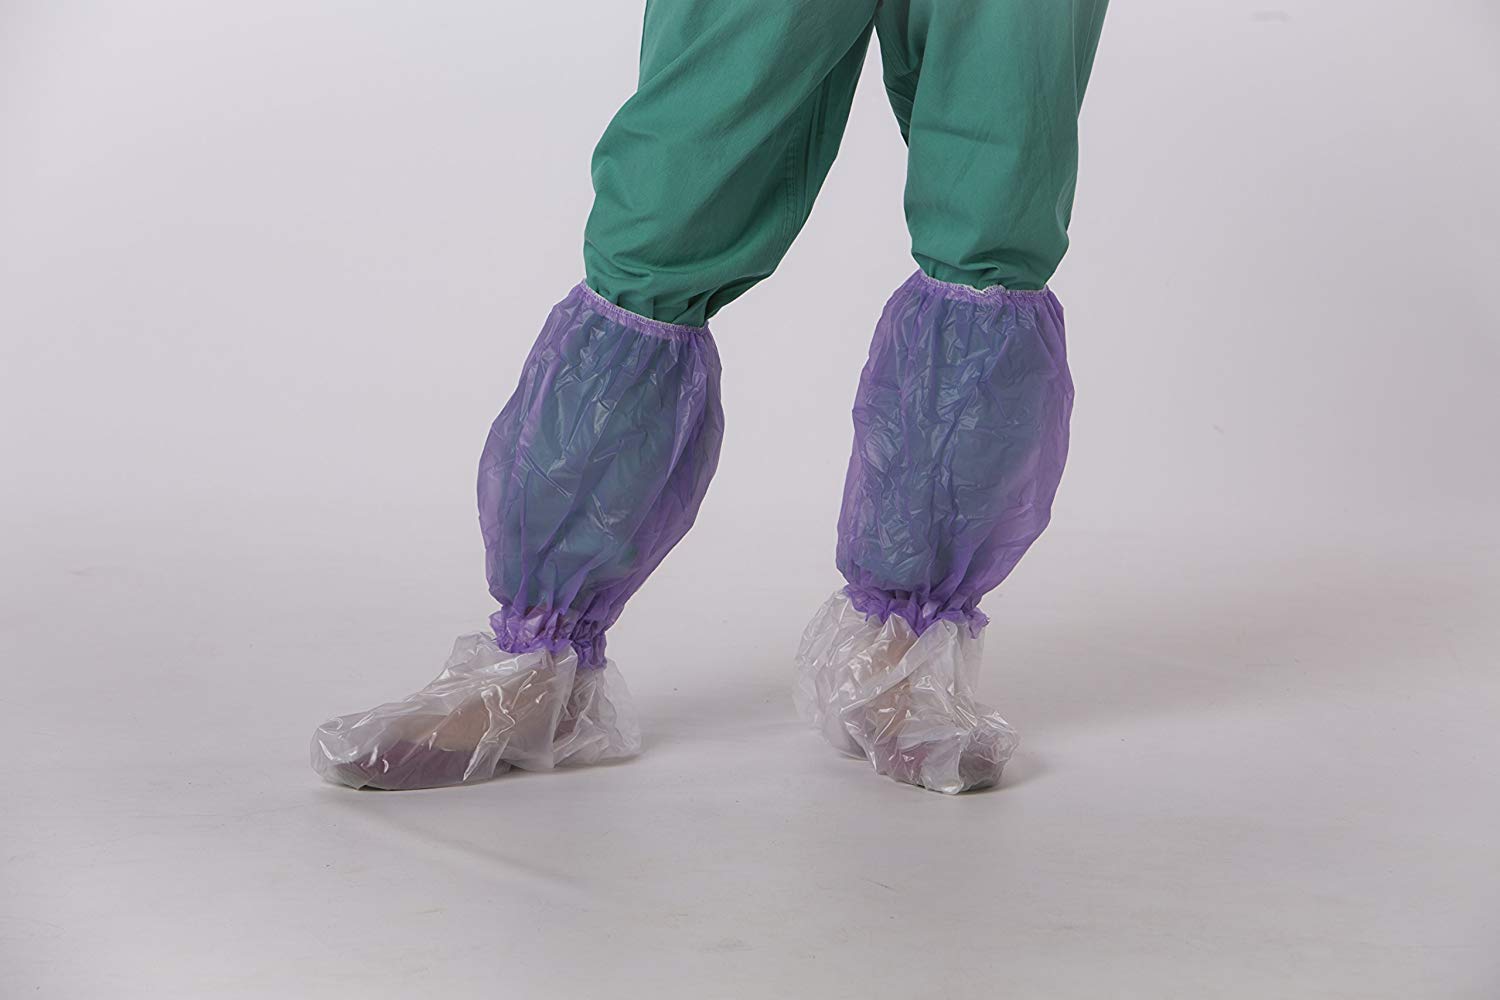 Sloan Sta-Dri KH-450 Knee-High Waterproof Shoe and Leg Covers (Pair)